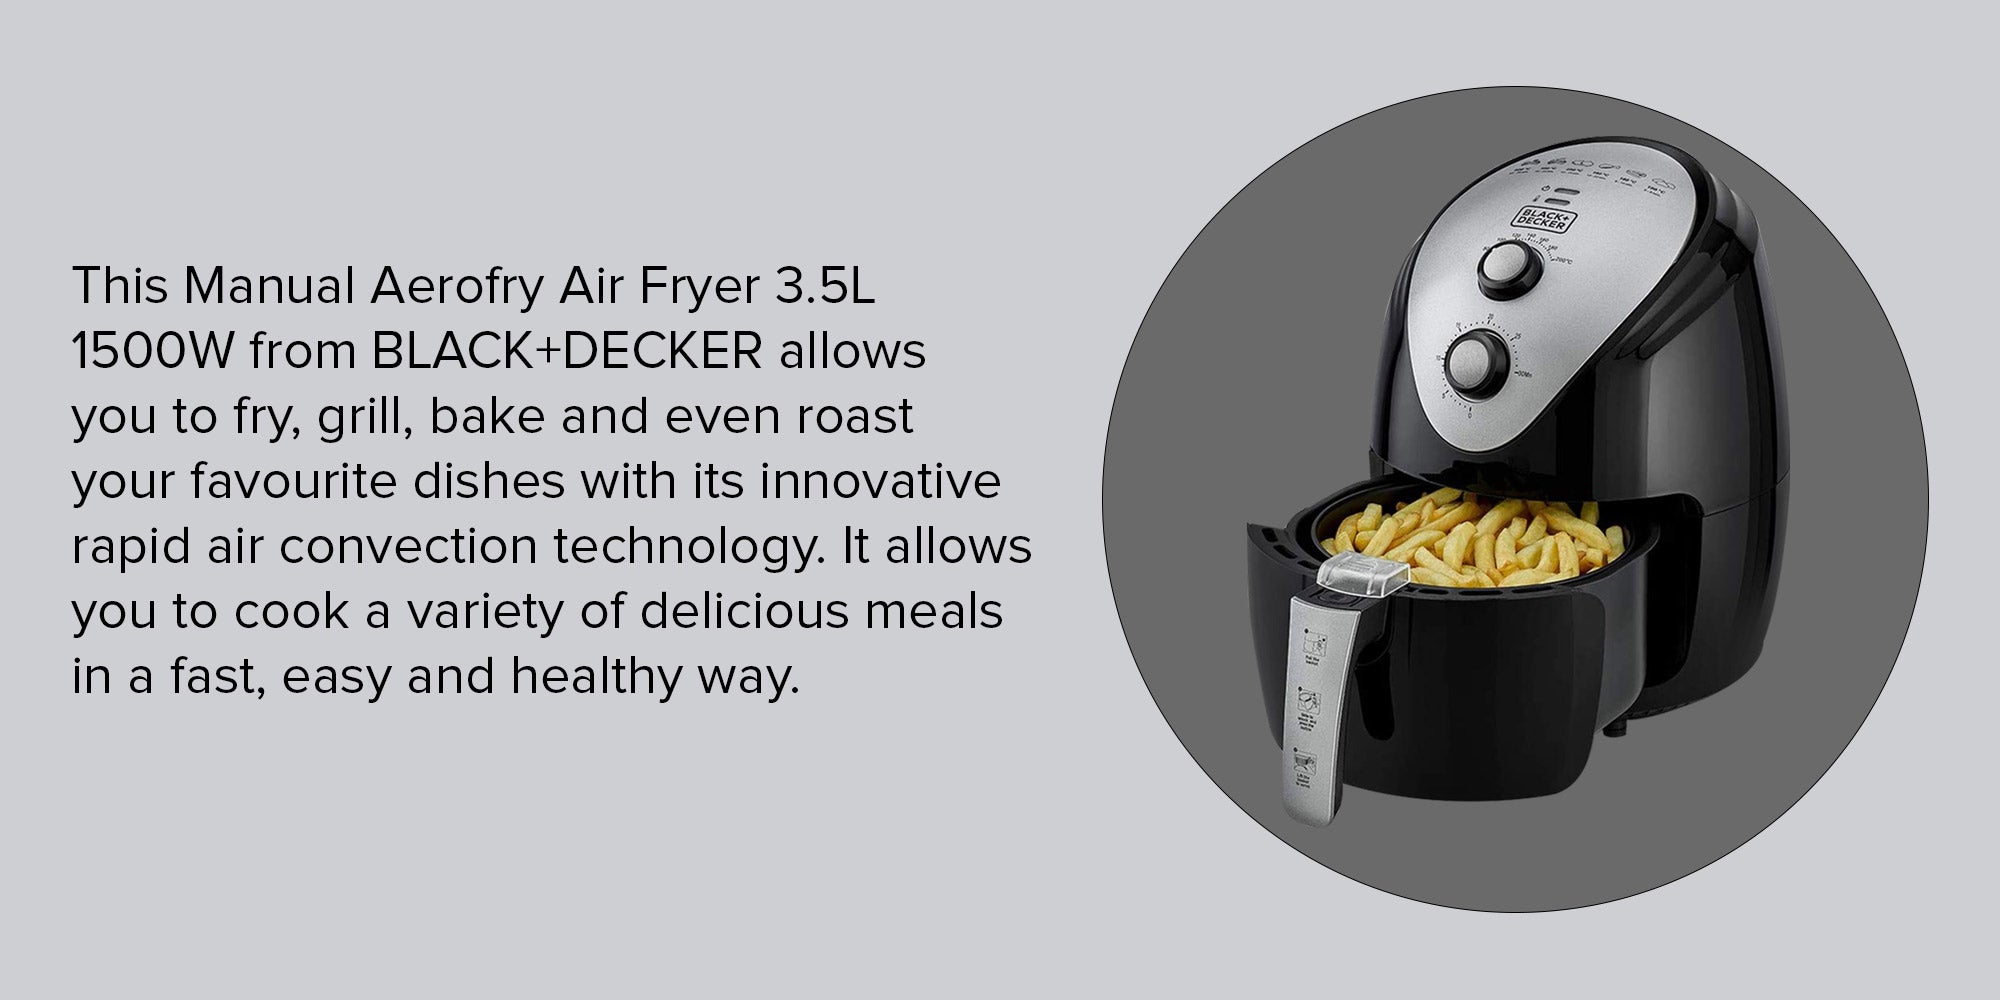 BLACK+DECKER Air Fryer Rapid Air Convection Technology Manual